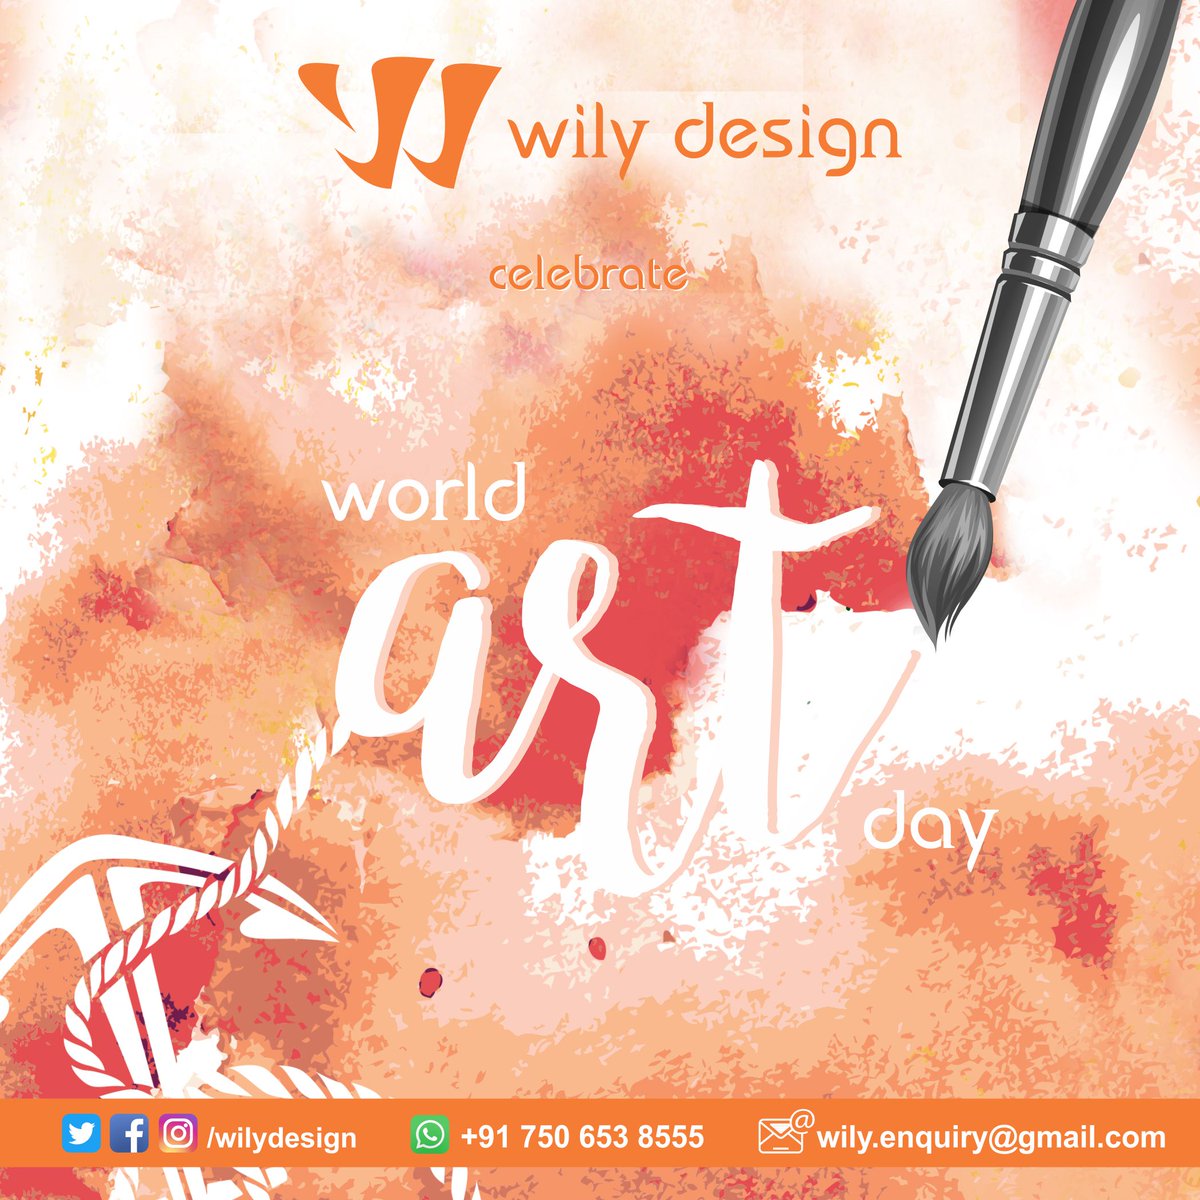 To be an artist is to believe in life
HAPPY WORLD ART DAY - Wily Design

#worldartday #worldartday2018 #keepcreating #happyworldartday